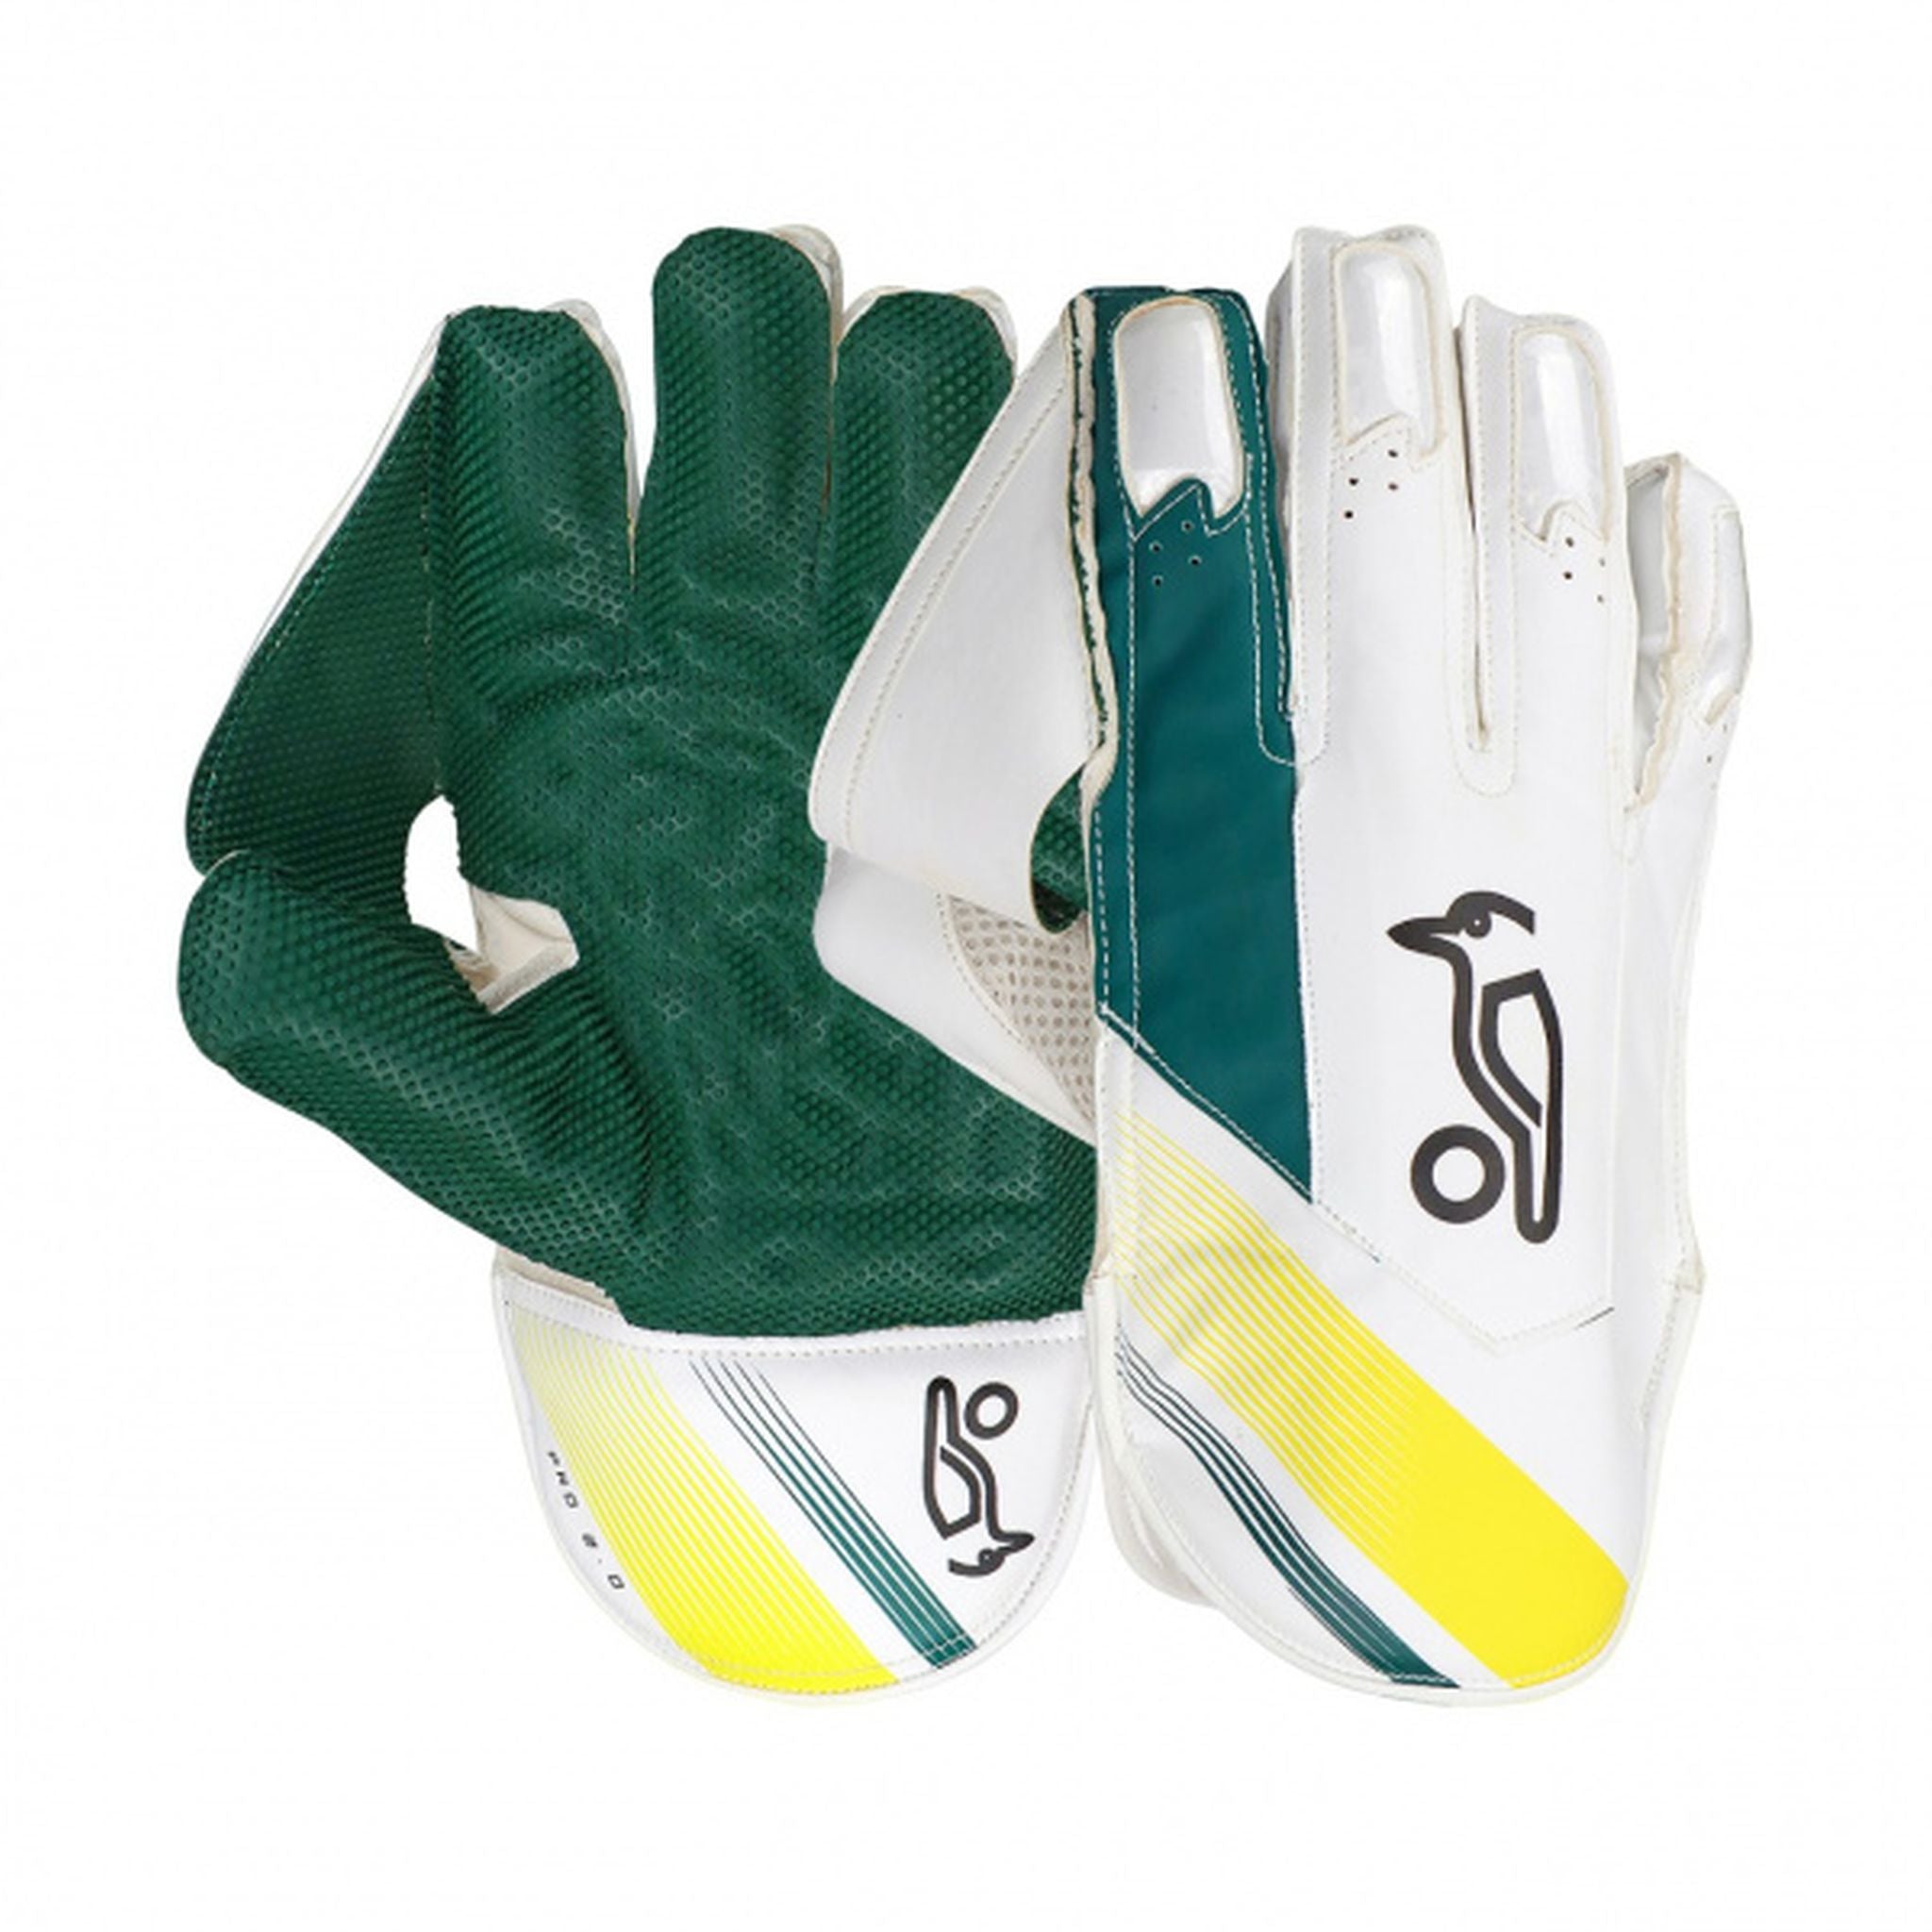 Kookaburra Pro 2.0 Adults Wicket Keeping Gloves